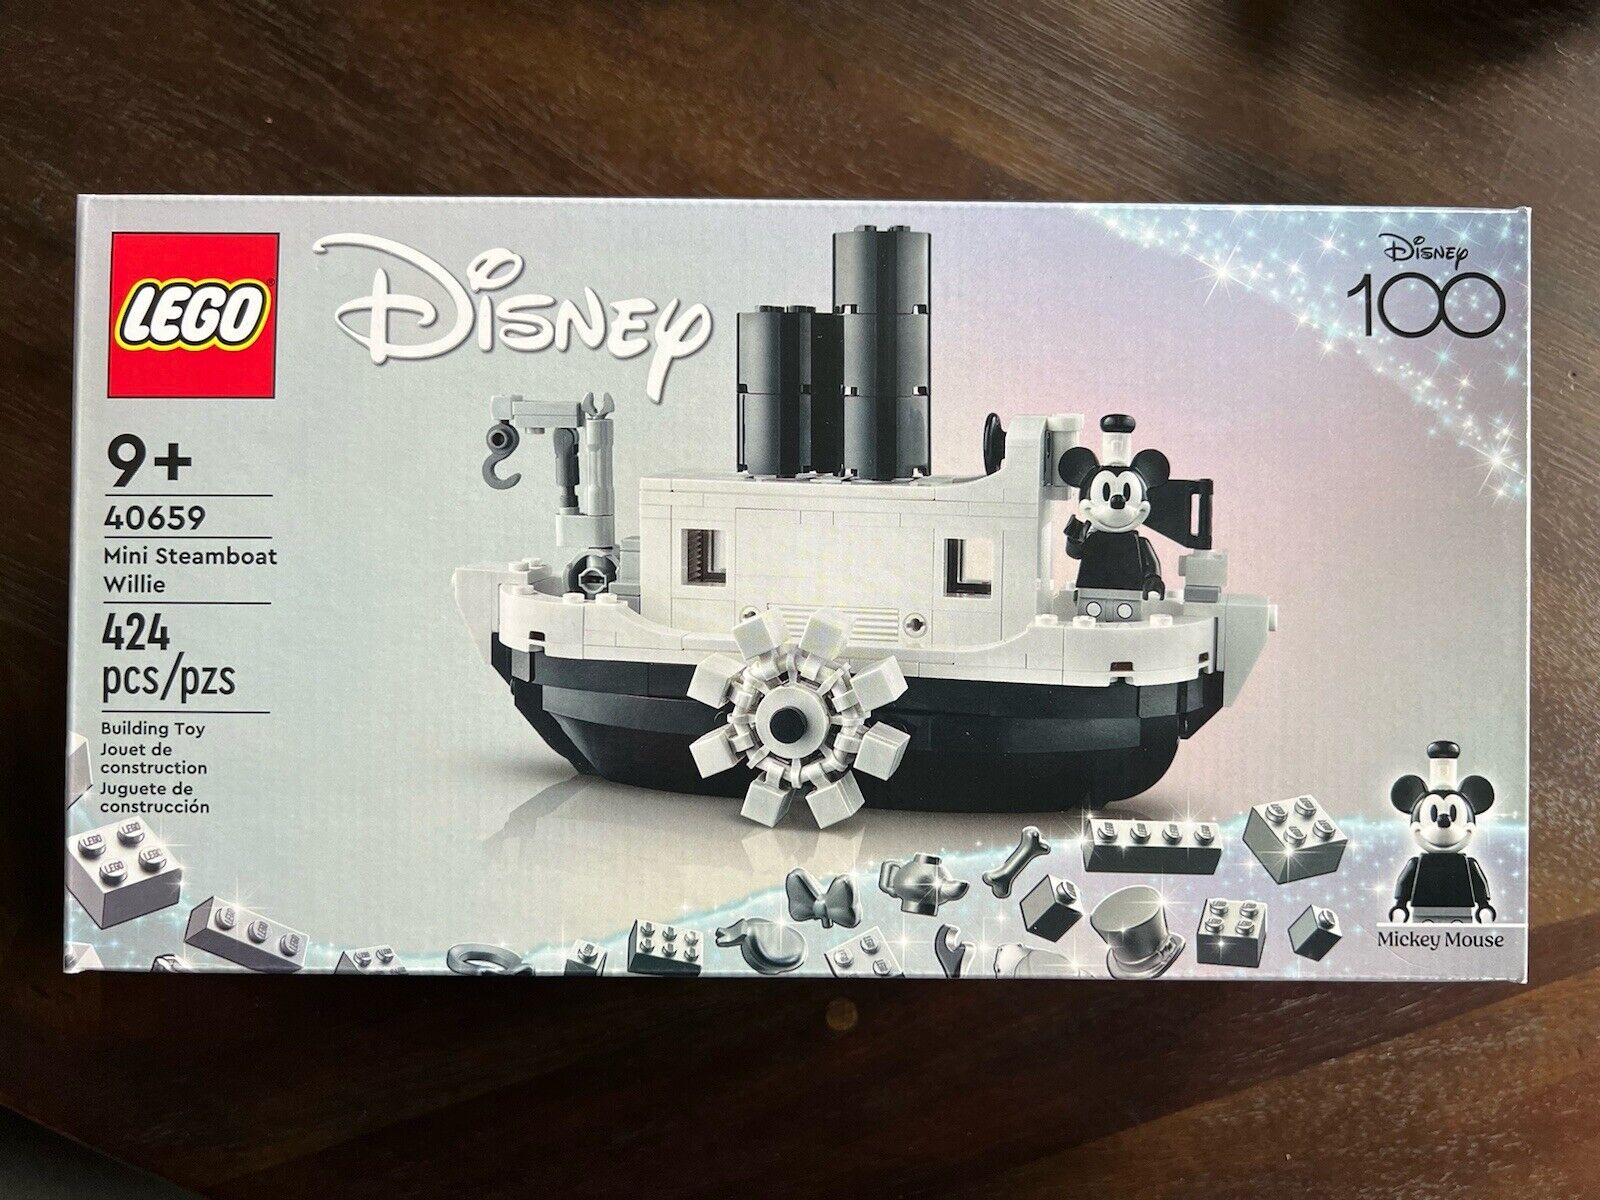 LEGO 40659 Disney 100 Years Mini Steamboat Willie Exclusive Promo